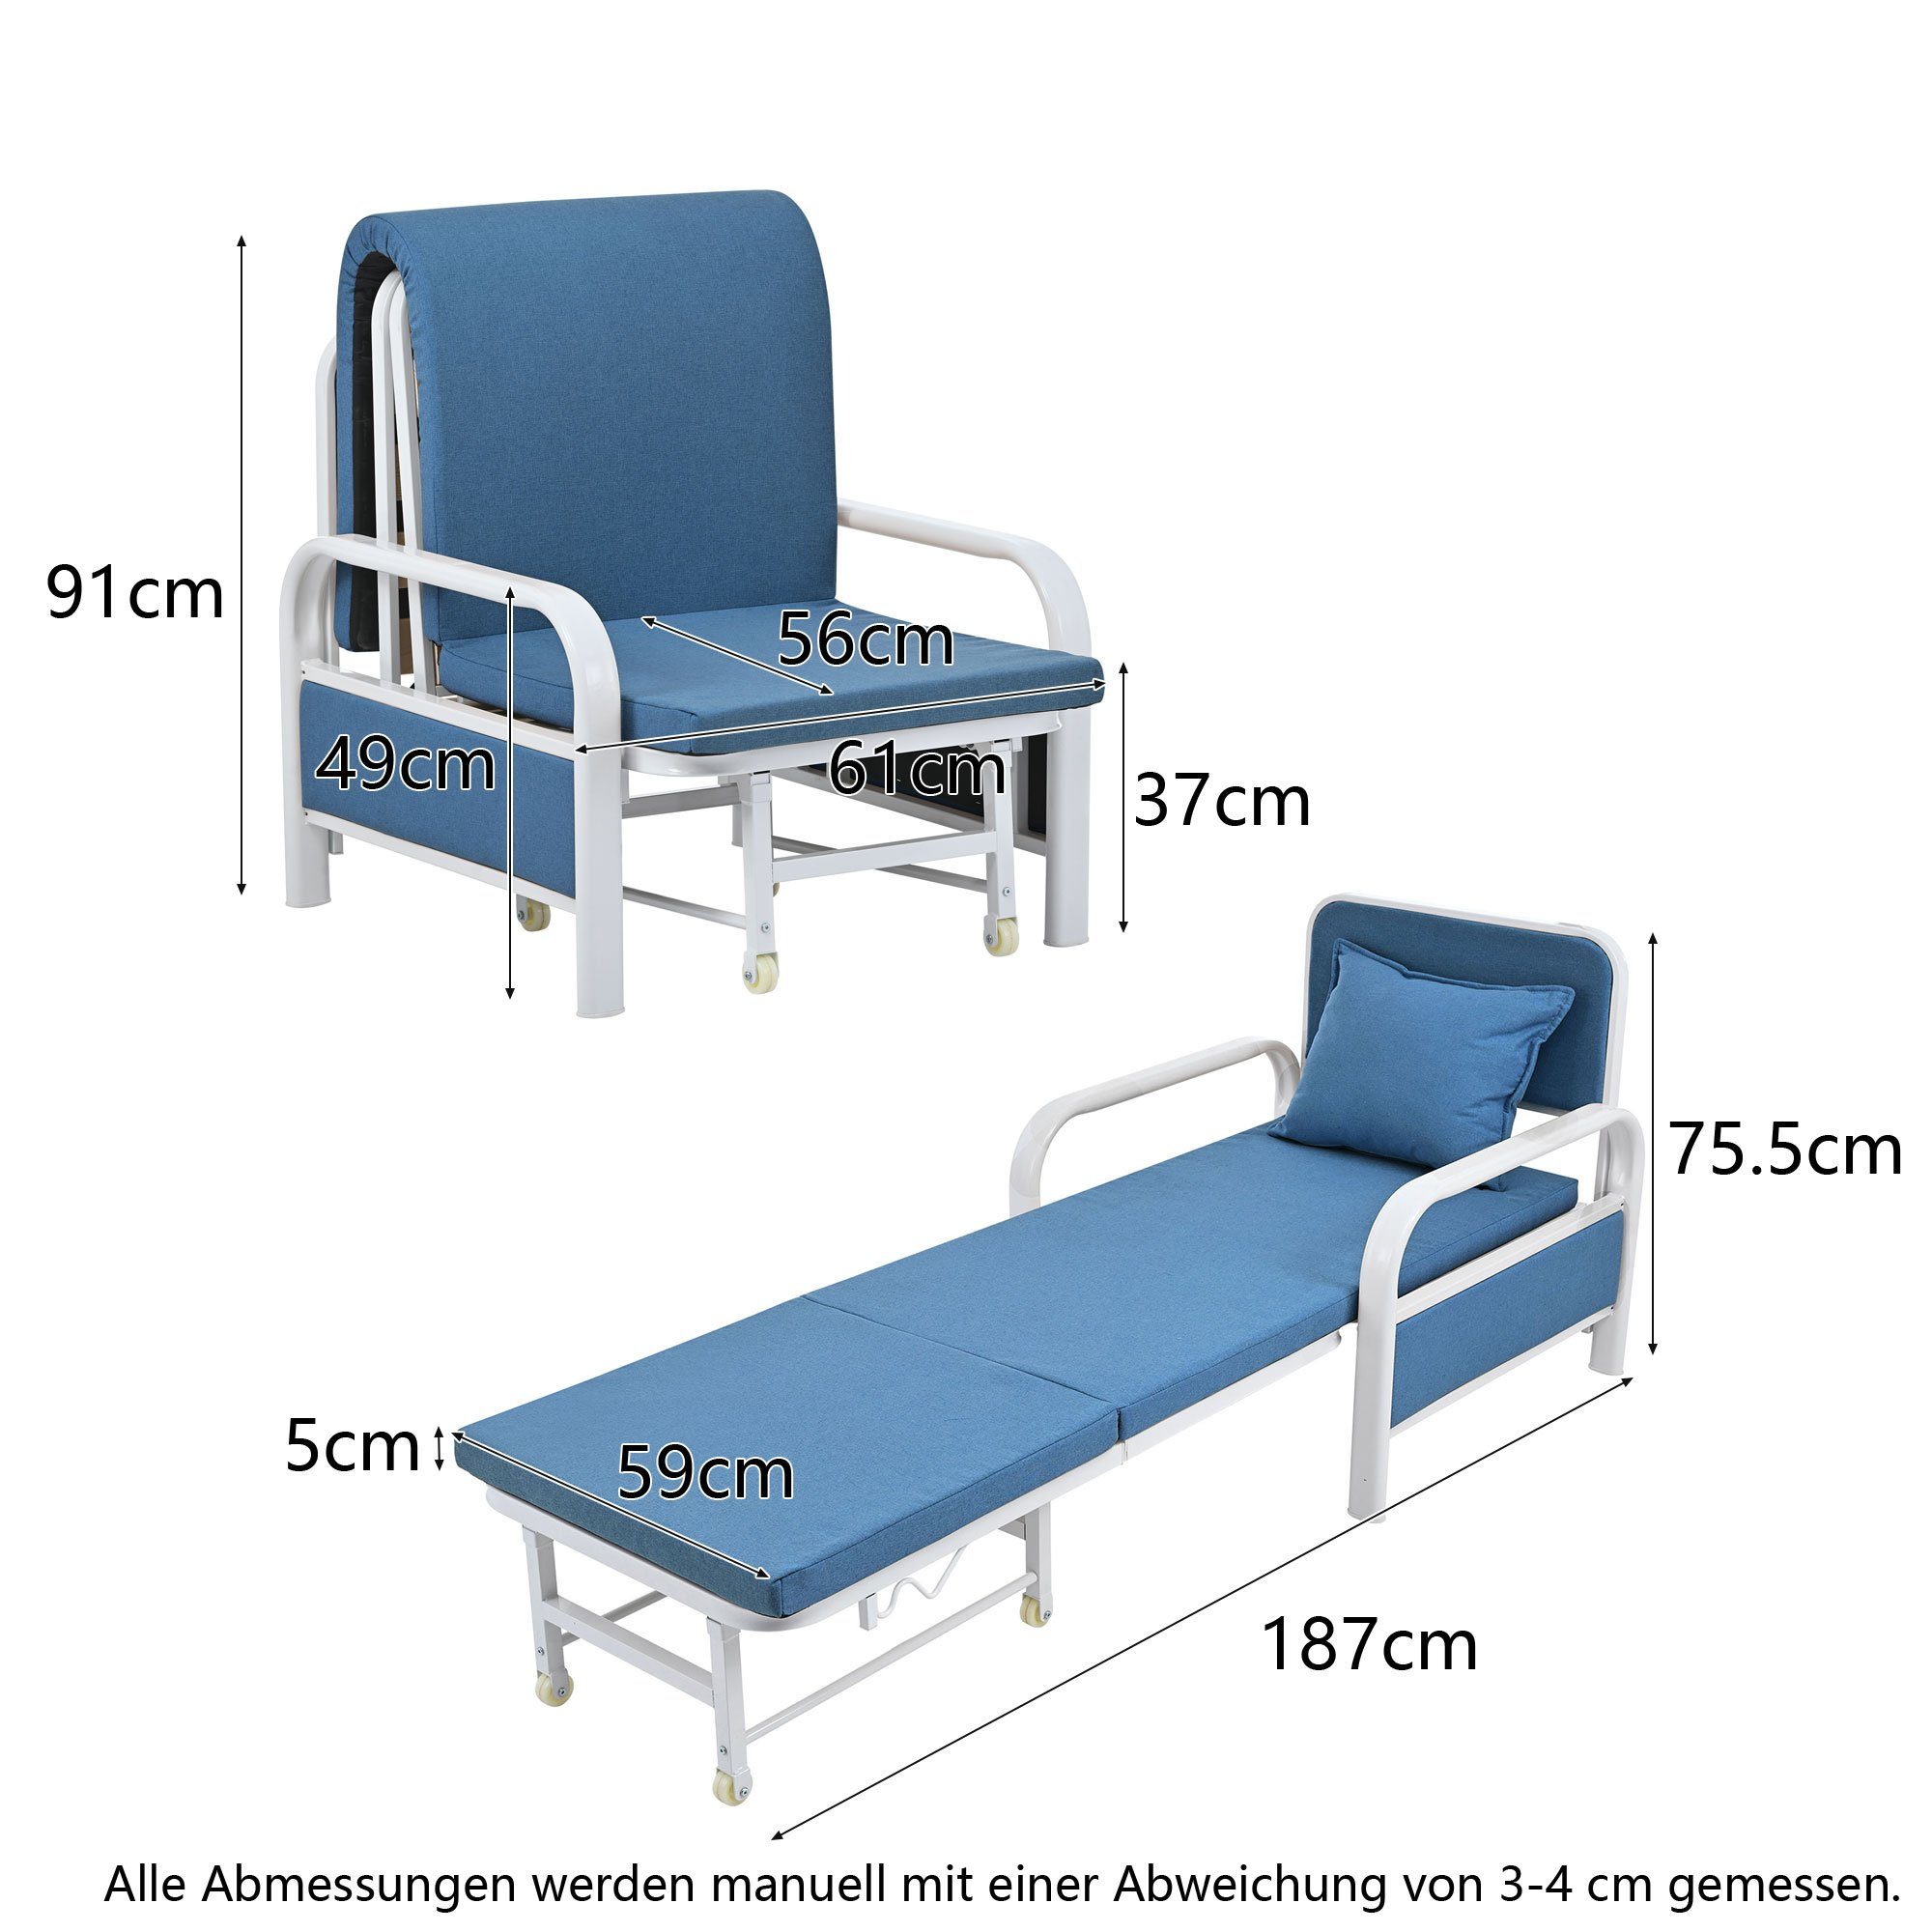 Chaiselongue in 2 Blau 3 Odikalo Schlafsofa Liegen, Farben Kissen,umwandelbar, 1 Sessel, mit